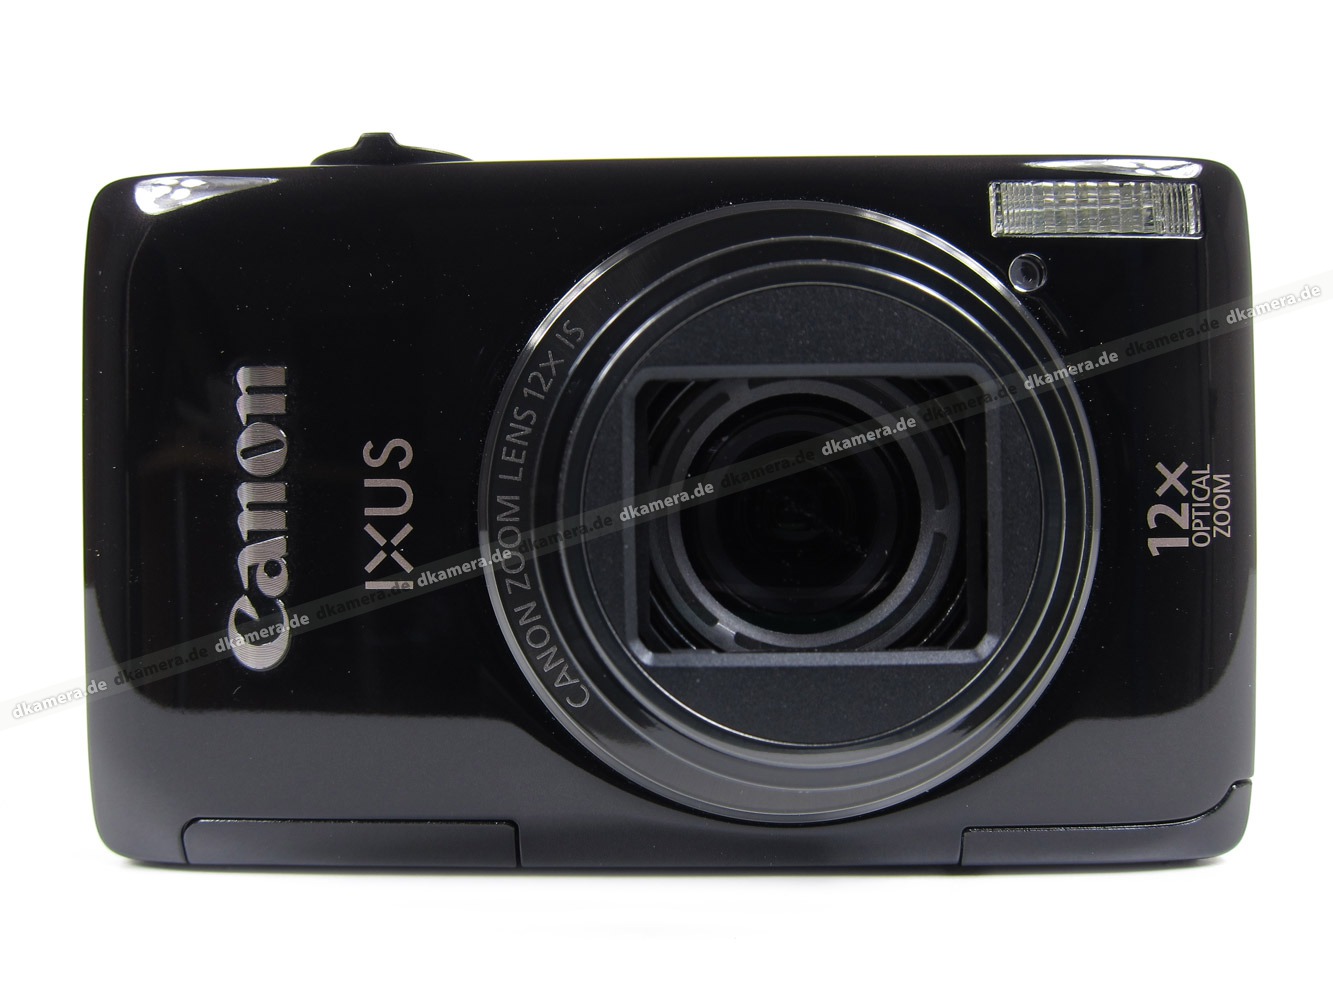 Canon IXUS 1100 HS Digital Camera Review